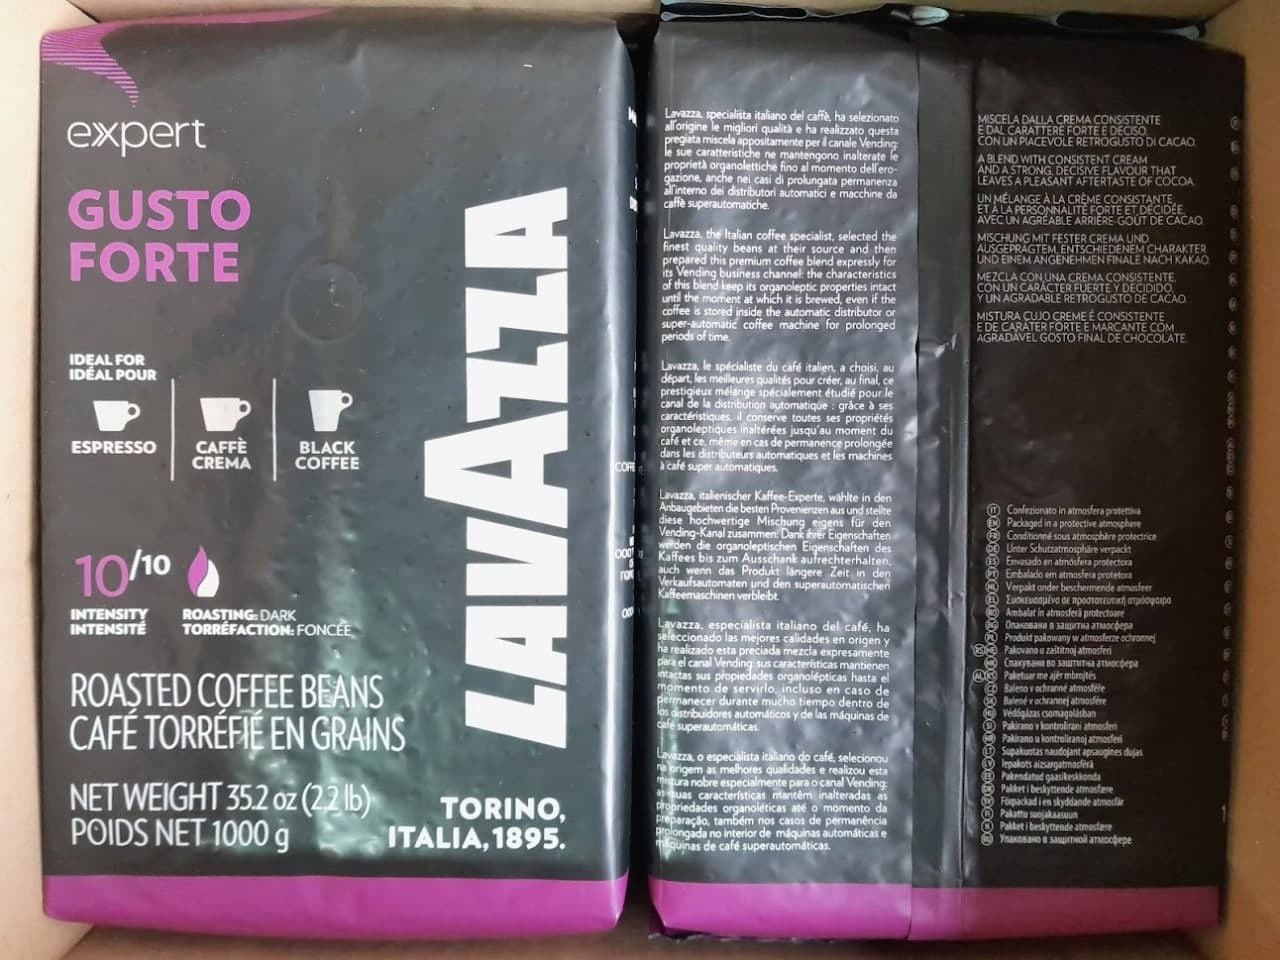 Зерновой кофе "LAVAZZA" Expert Gusto Forte